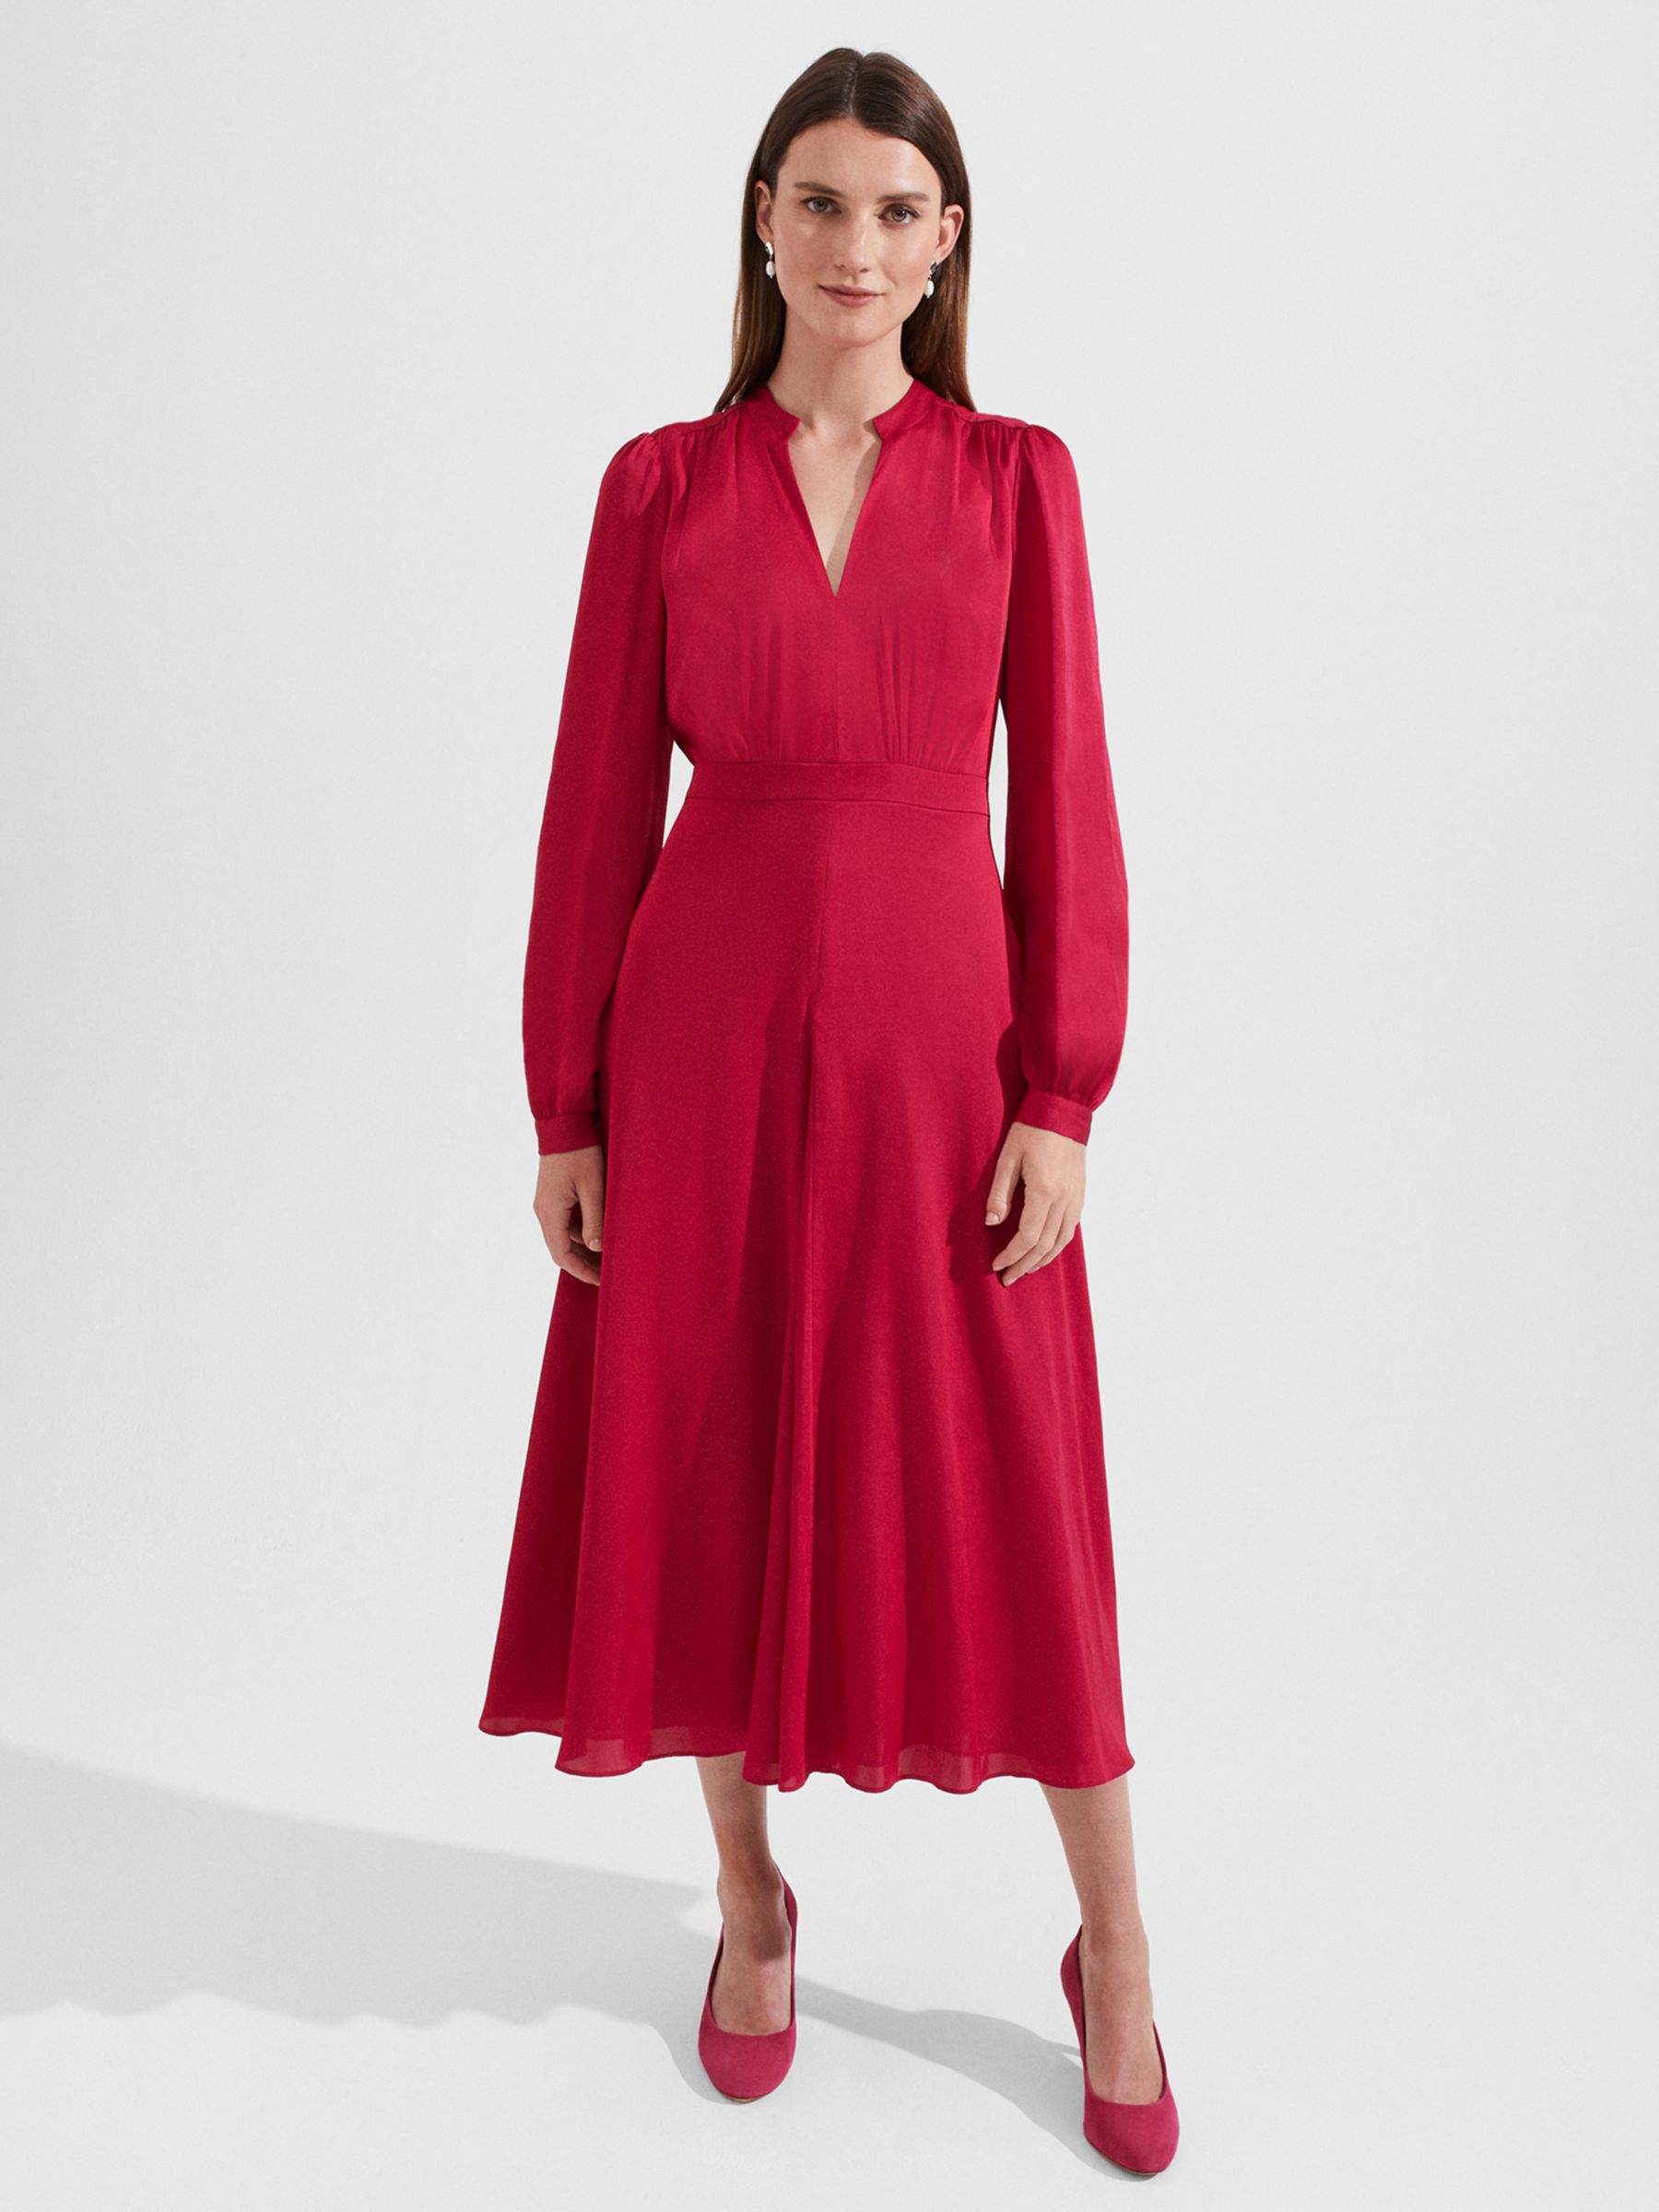 Hobbs Ivanna Plain Midi Dress, Jam Pink at John Lewis & Partners